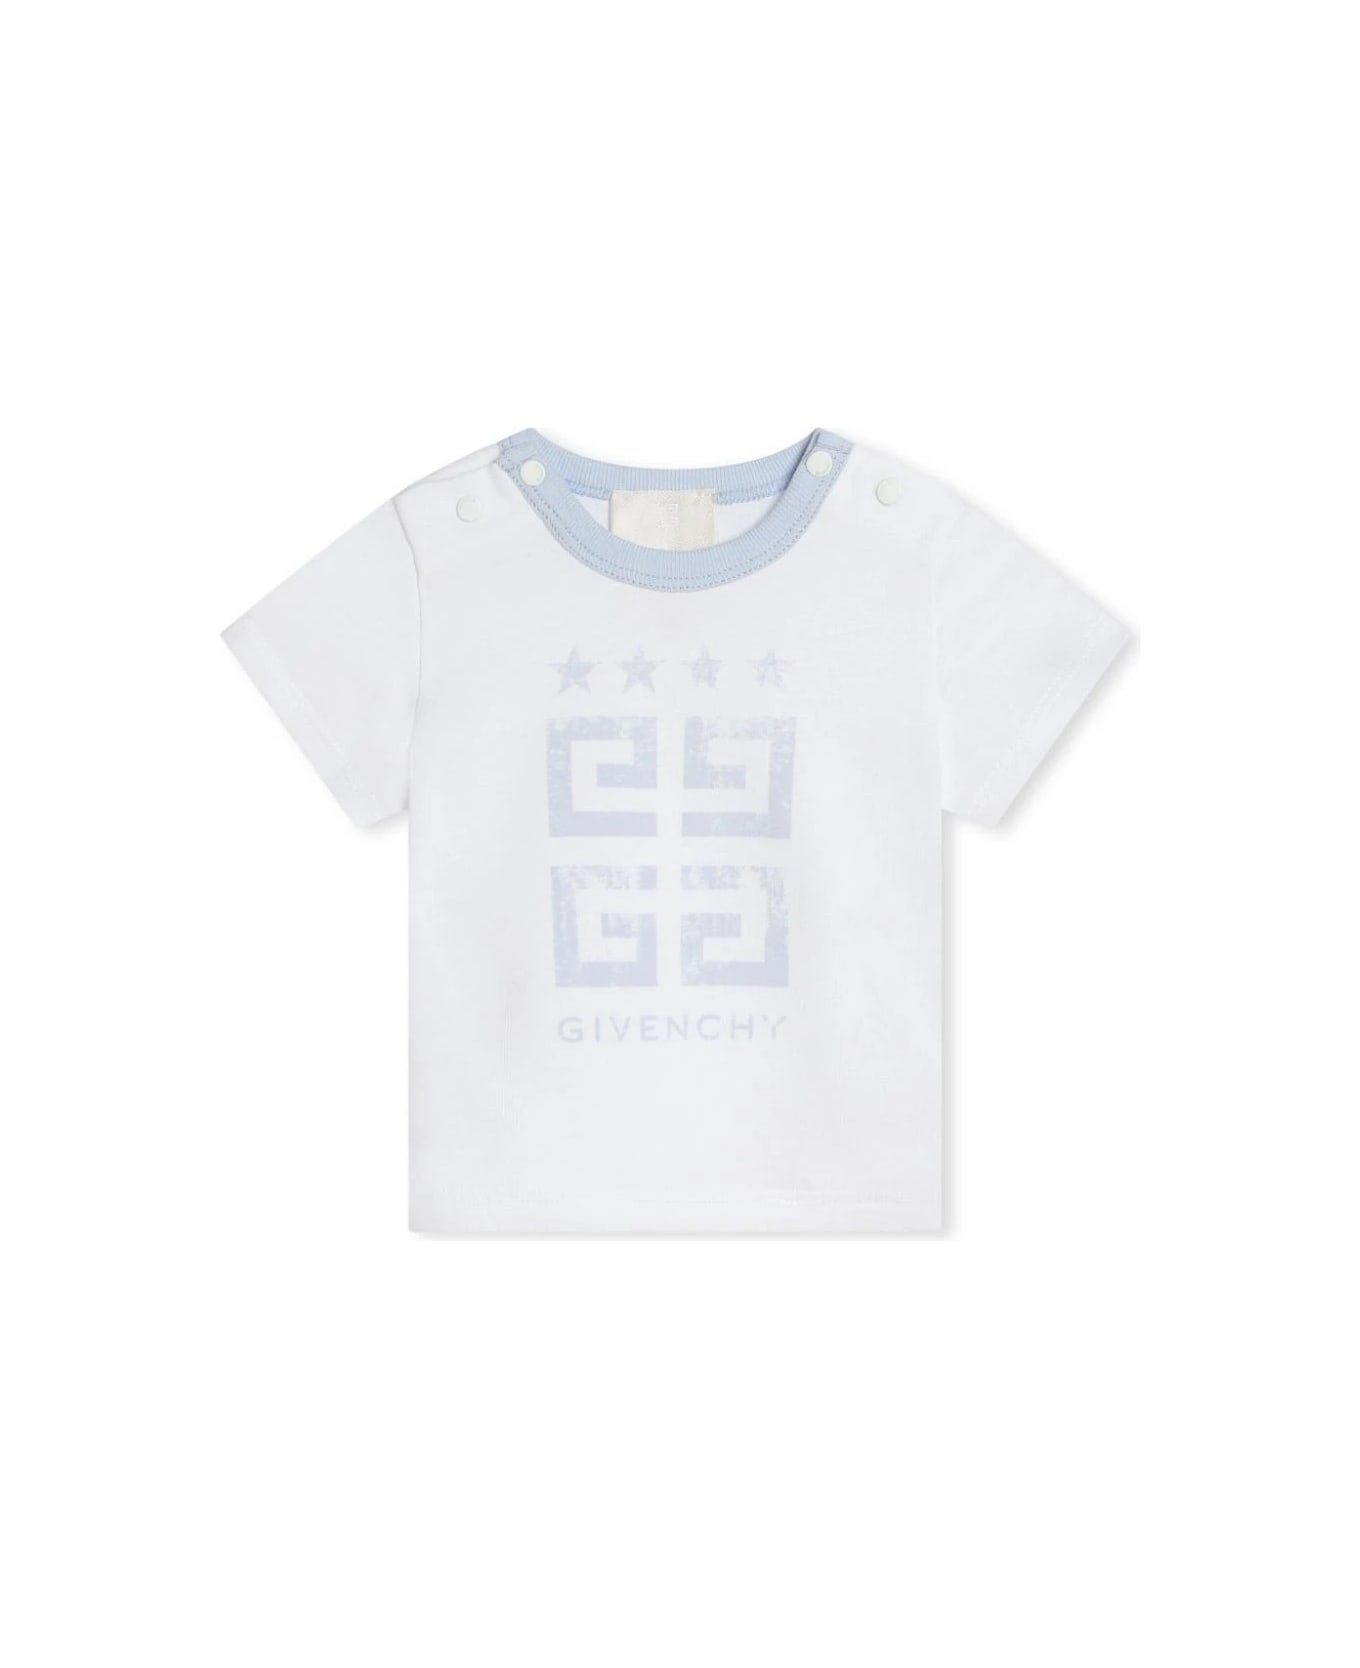 Givenchy White And Light Blue Set With T-shirt, Shorts And Bandana - Blue